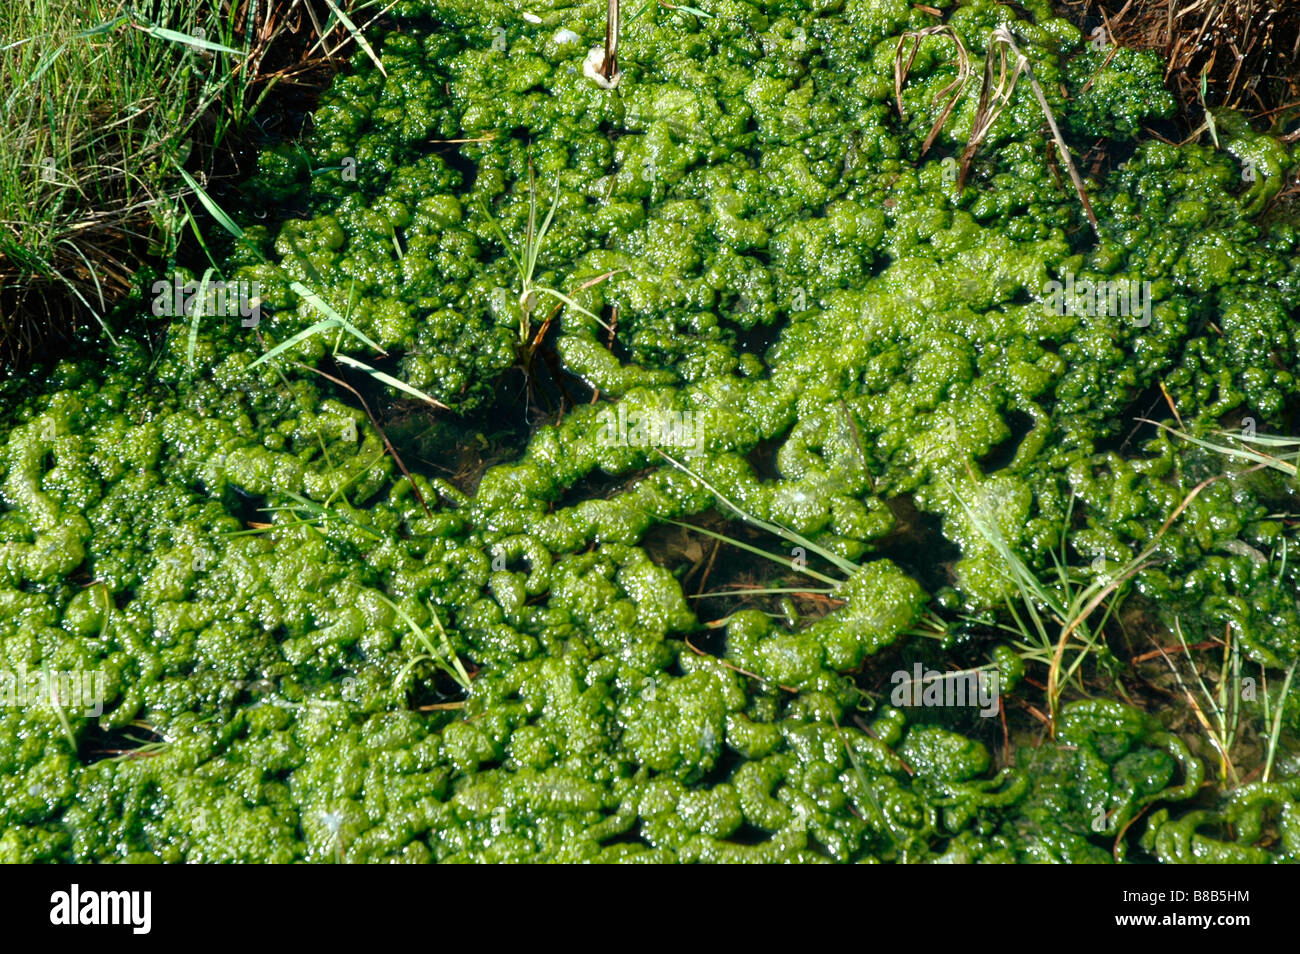 Gut weed Enteromorpha intestinalis a green alga in a pool UK Stock Photo